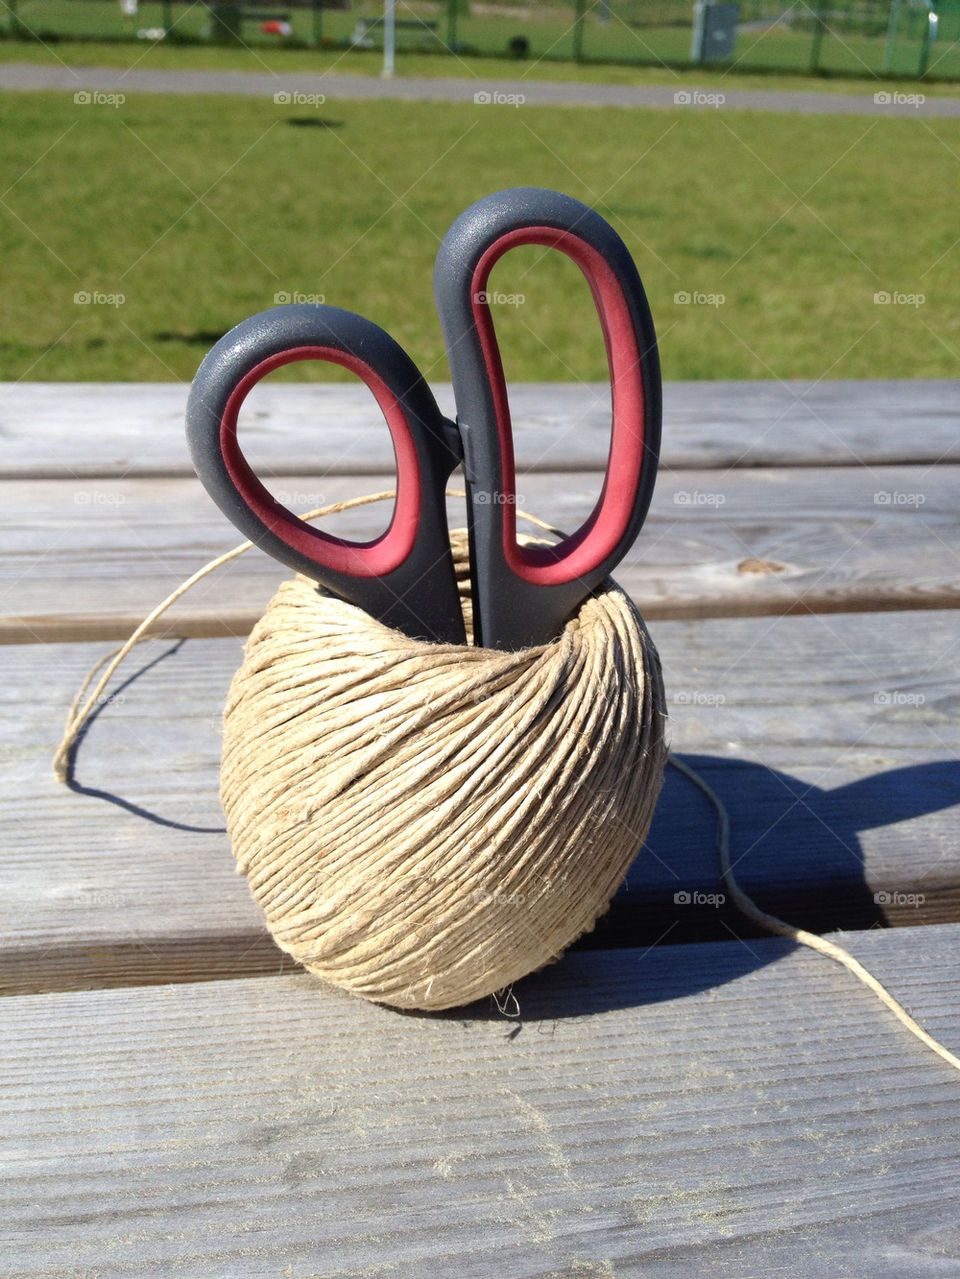 sweden sigtuna strings yarn by jonsko